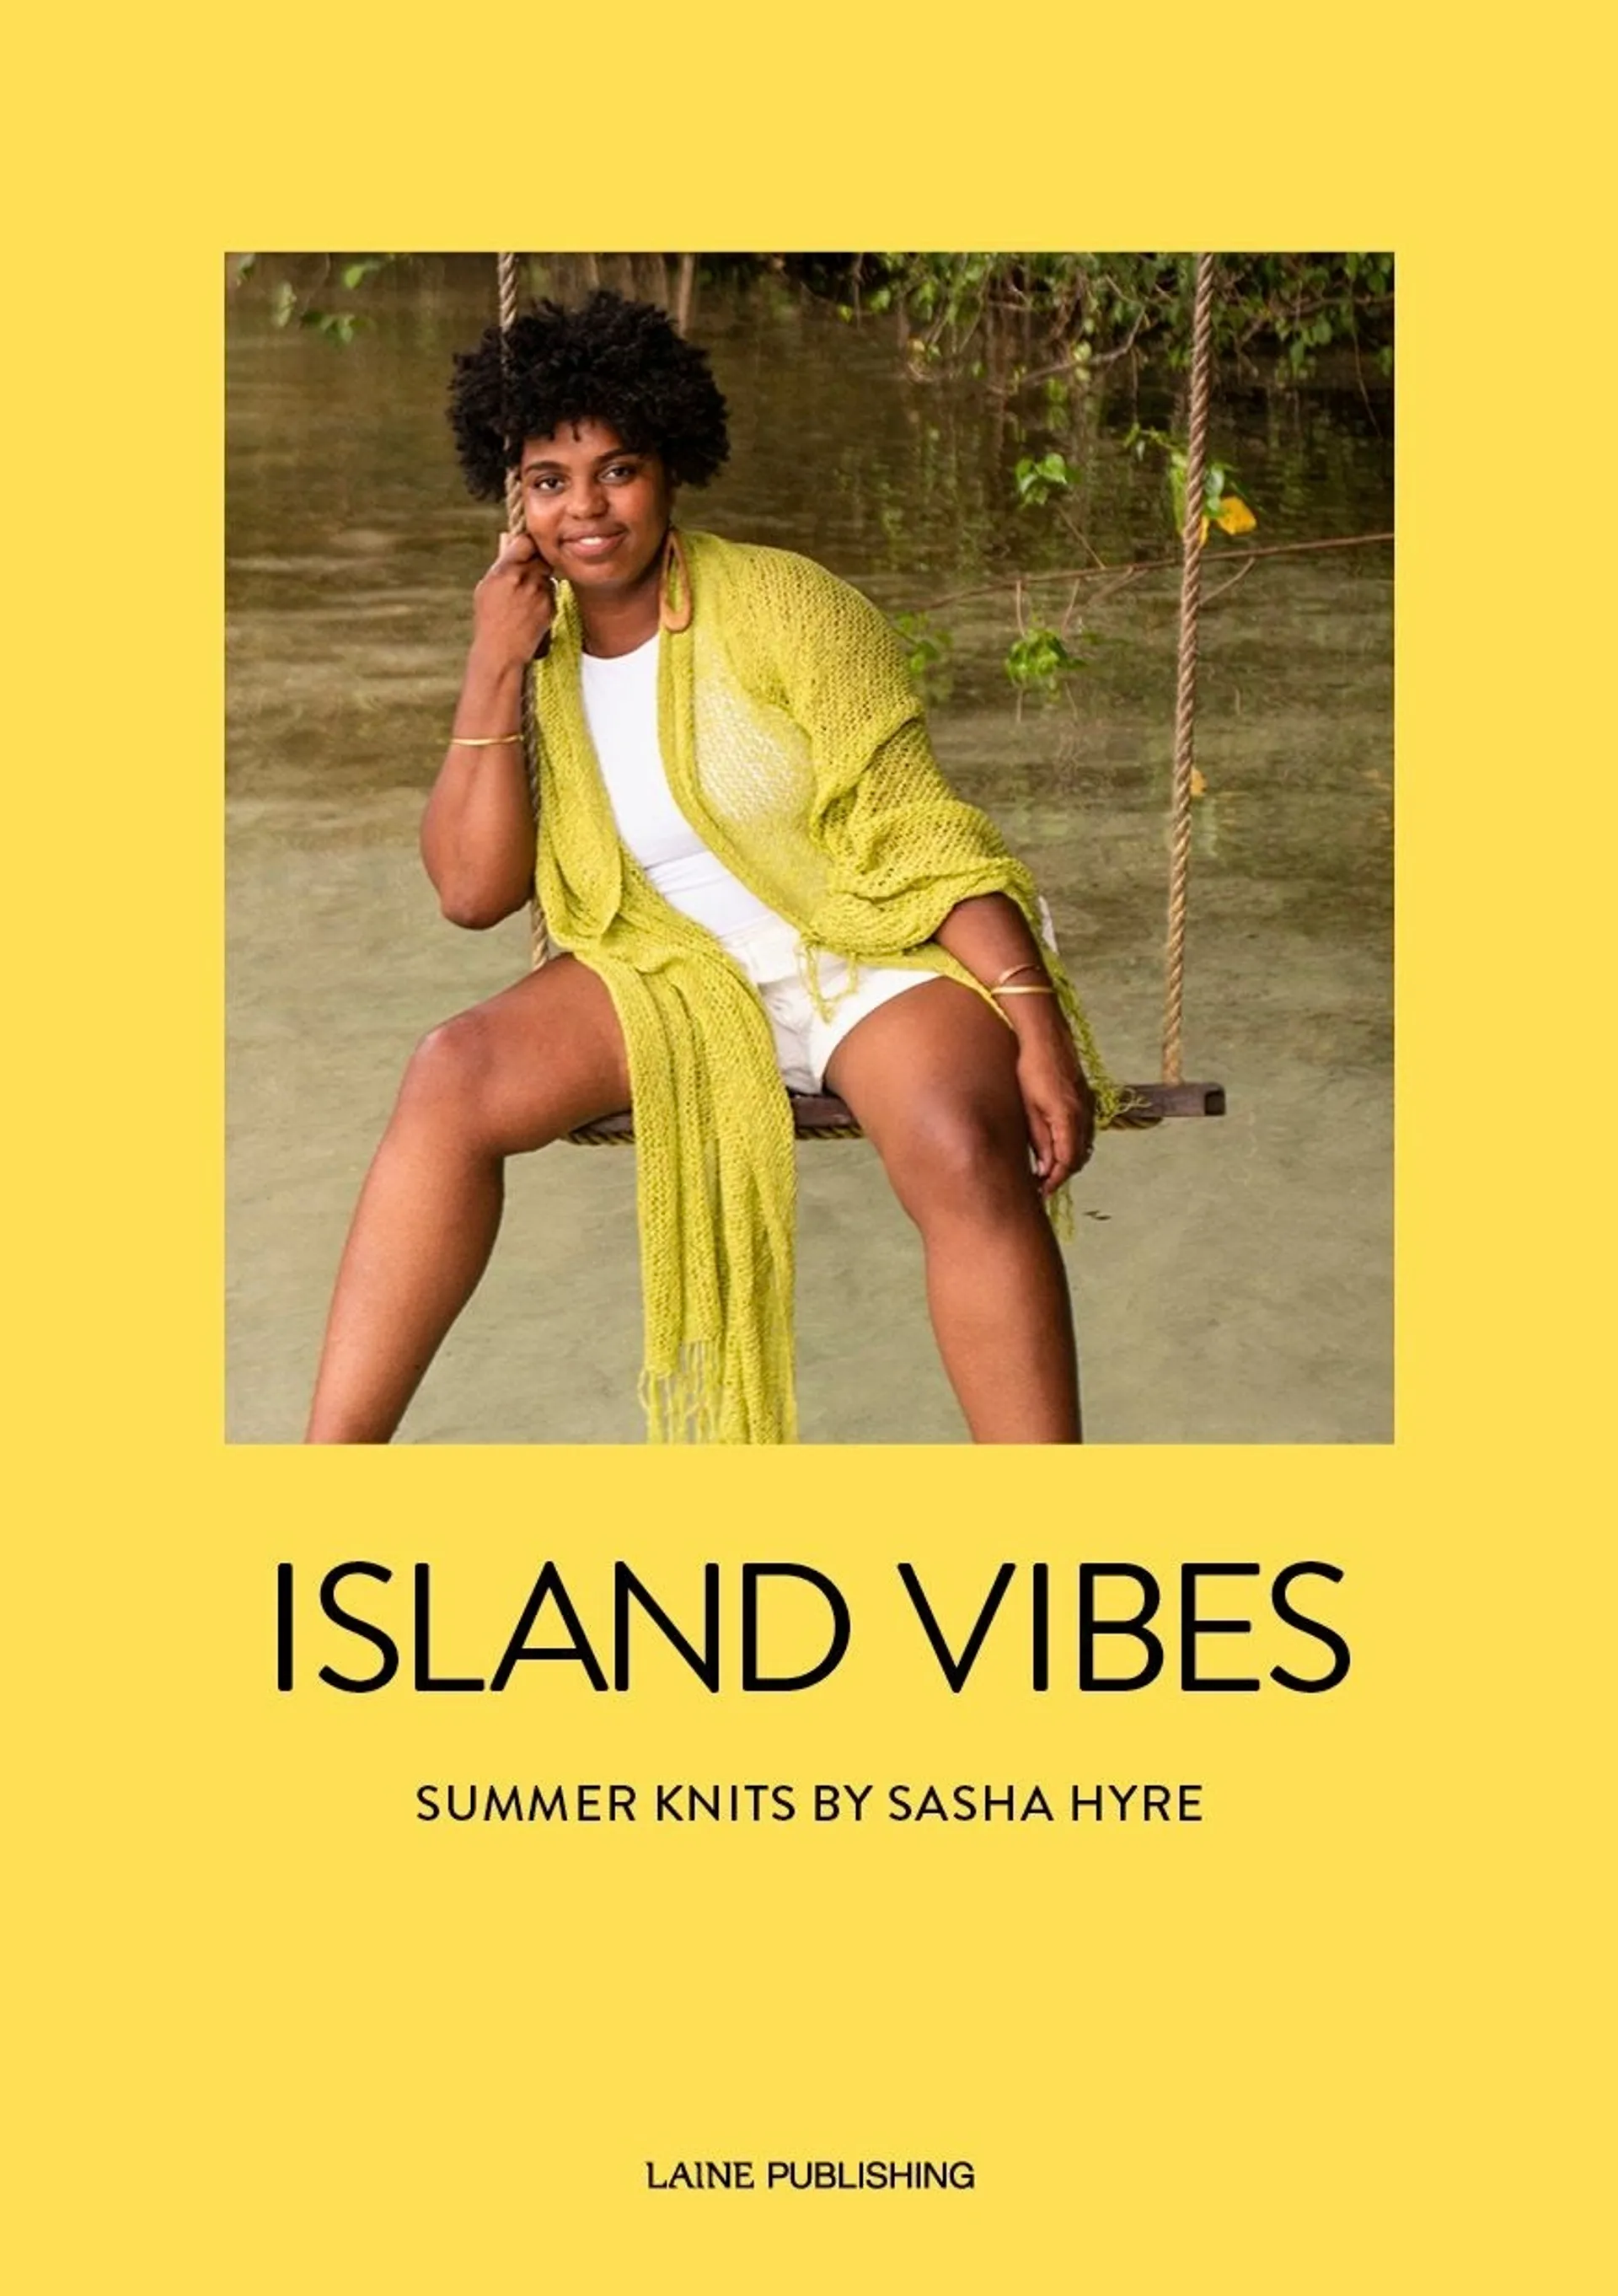 Hyre, Island Vibes - Summer Knits by Sasha Hyre